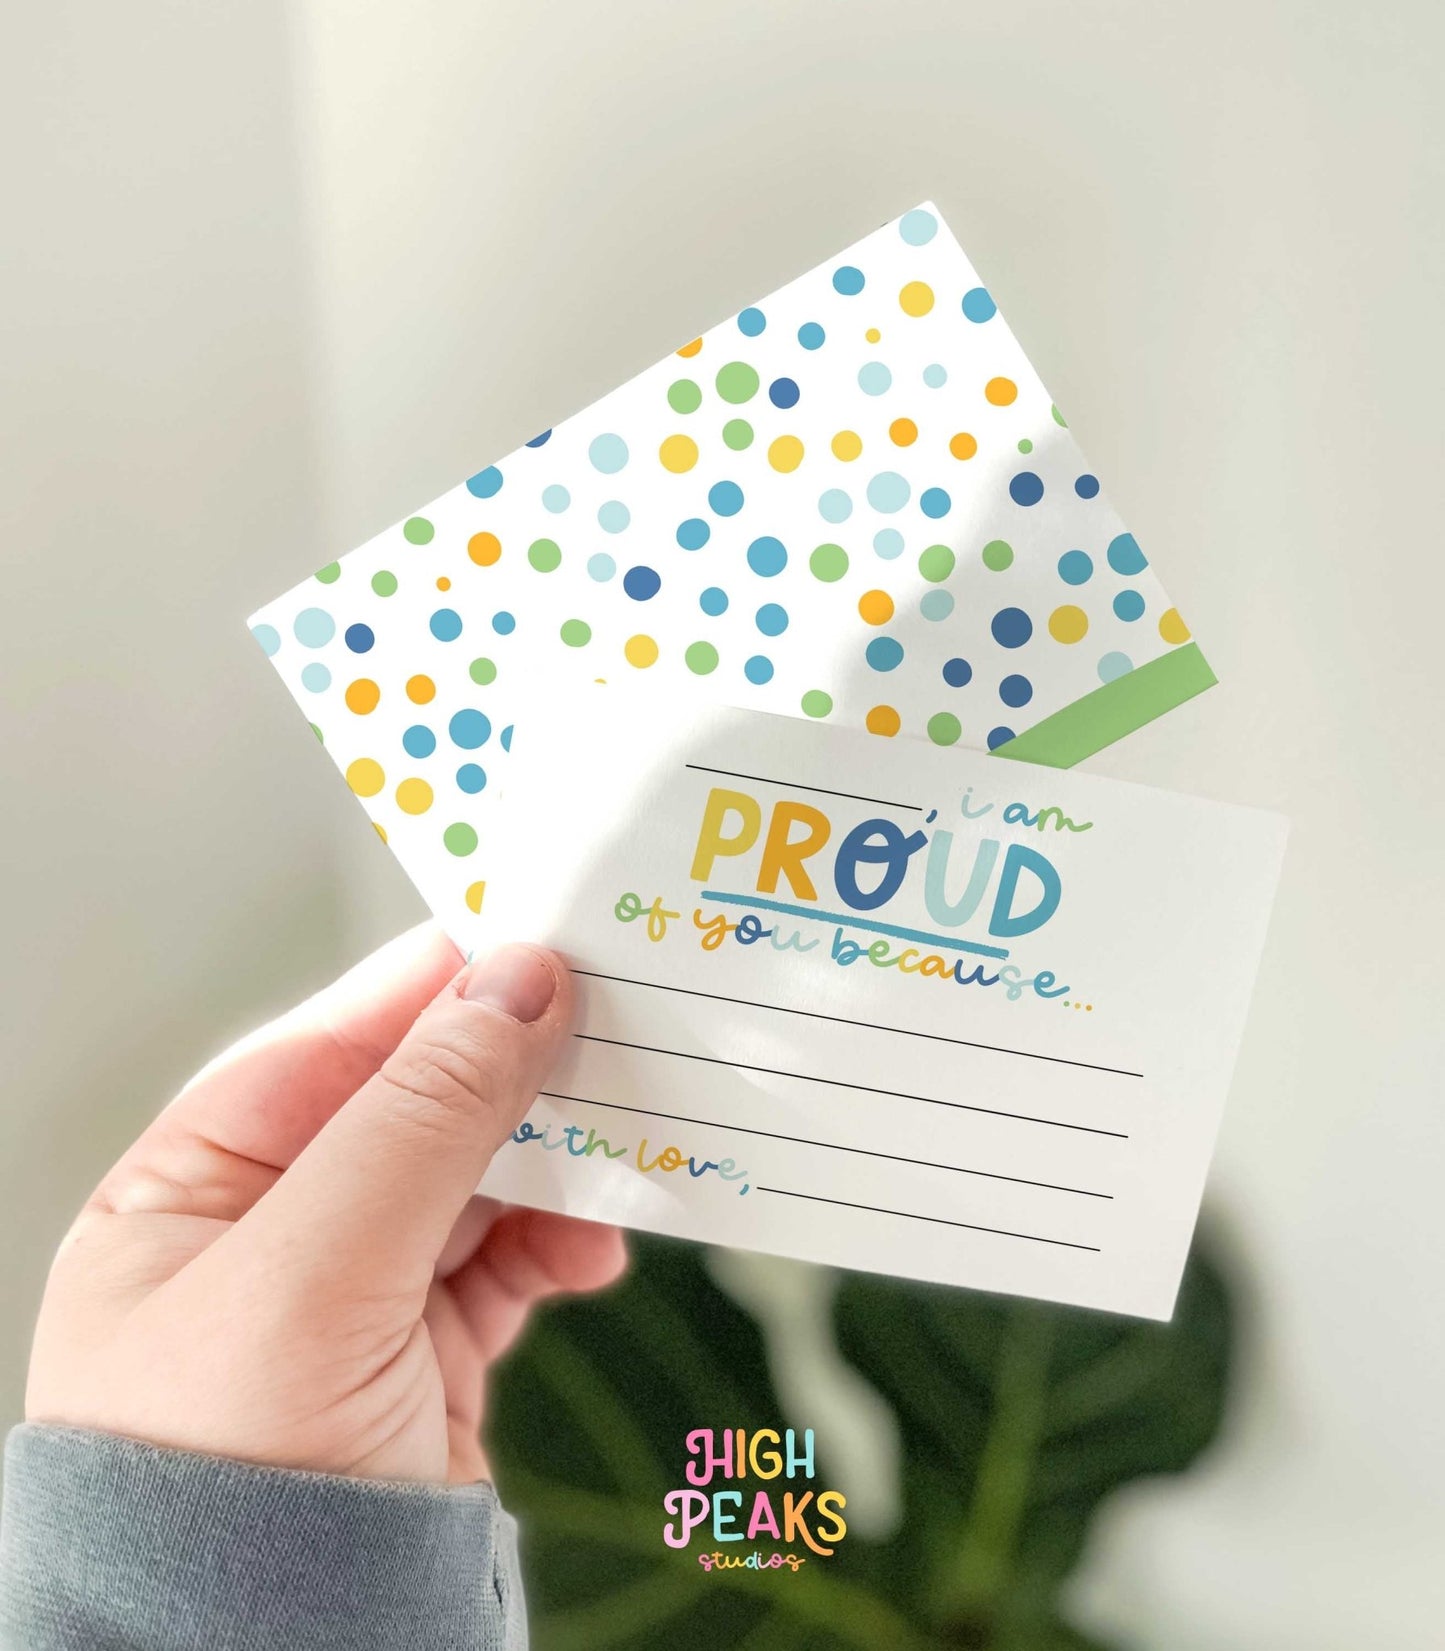 Kids Affirmation Prompt Cards; Empower Your Kids - BLUE - High Peaks Studios